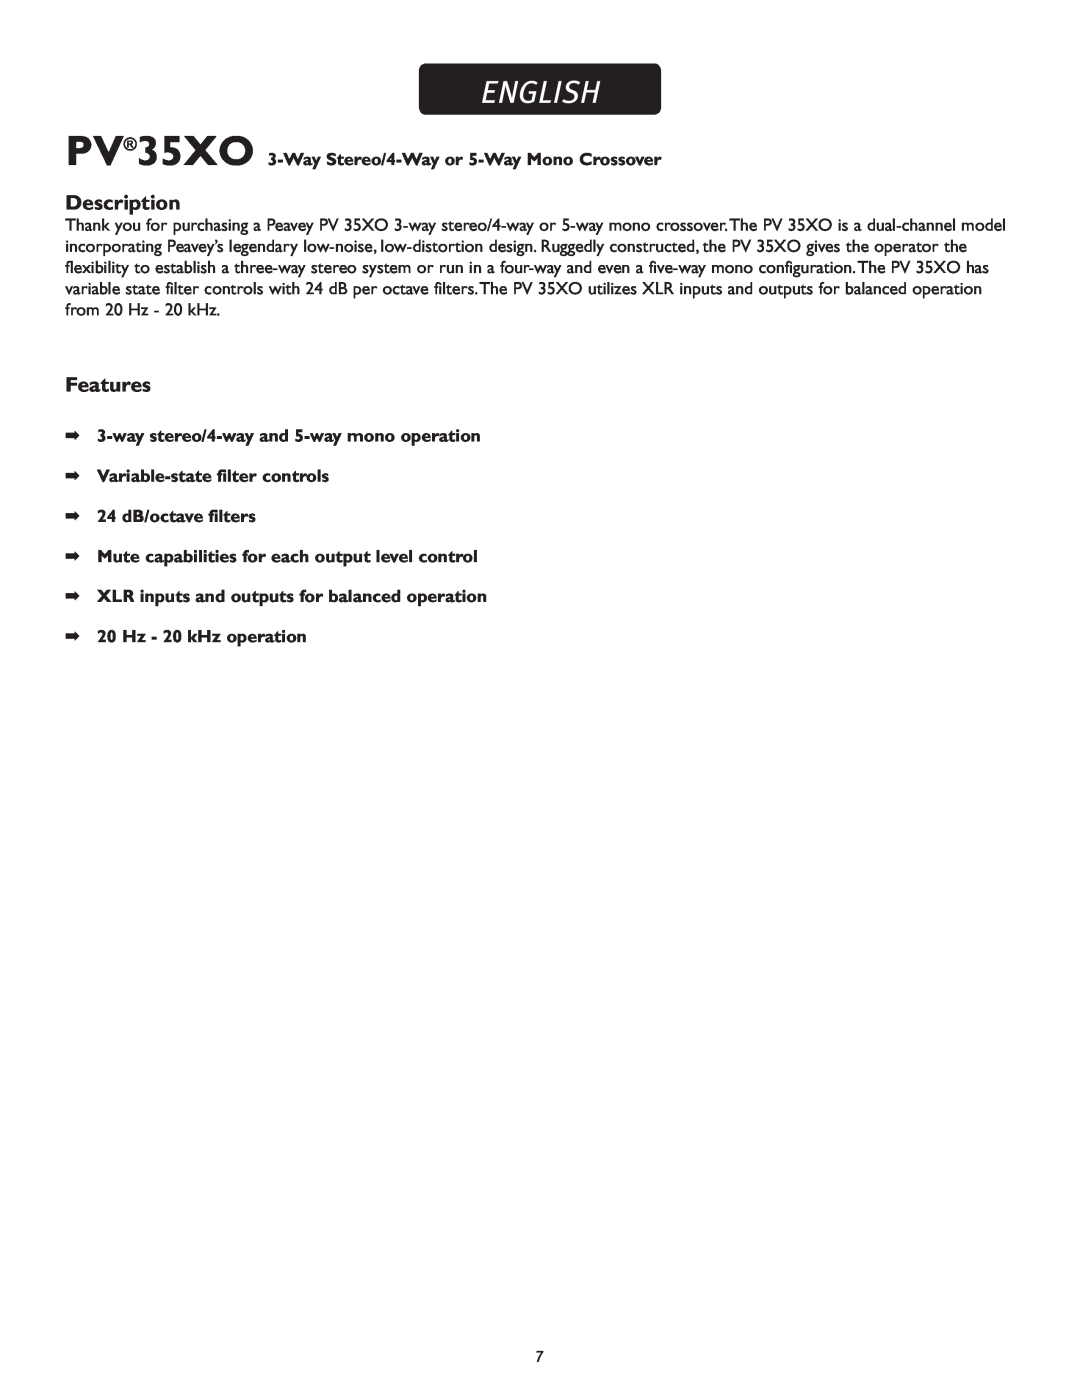 Peavey PV 35XO manual English, Description, Features 